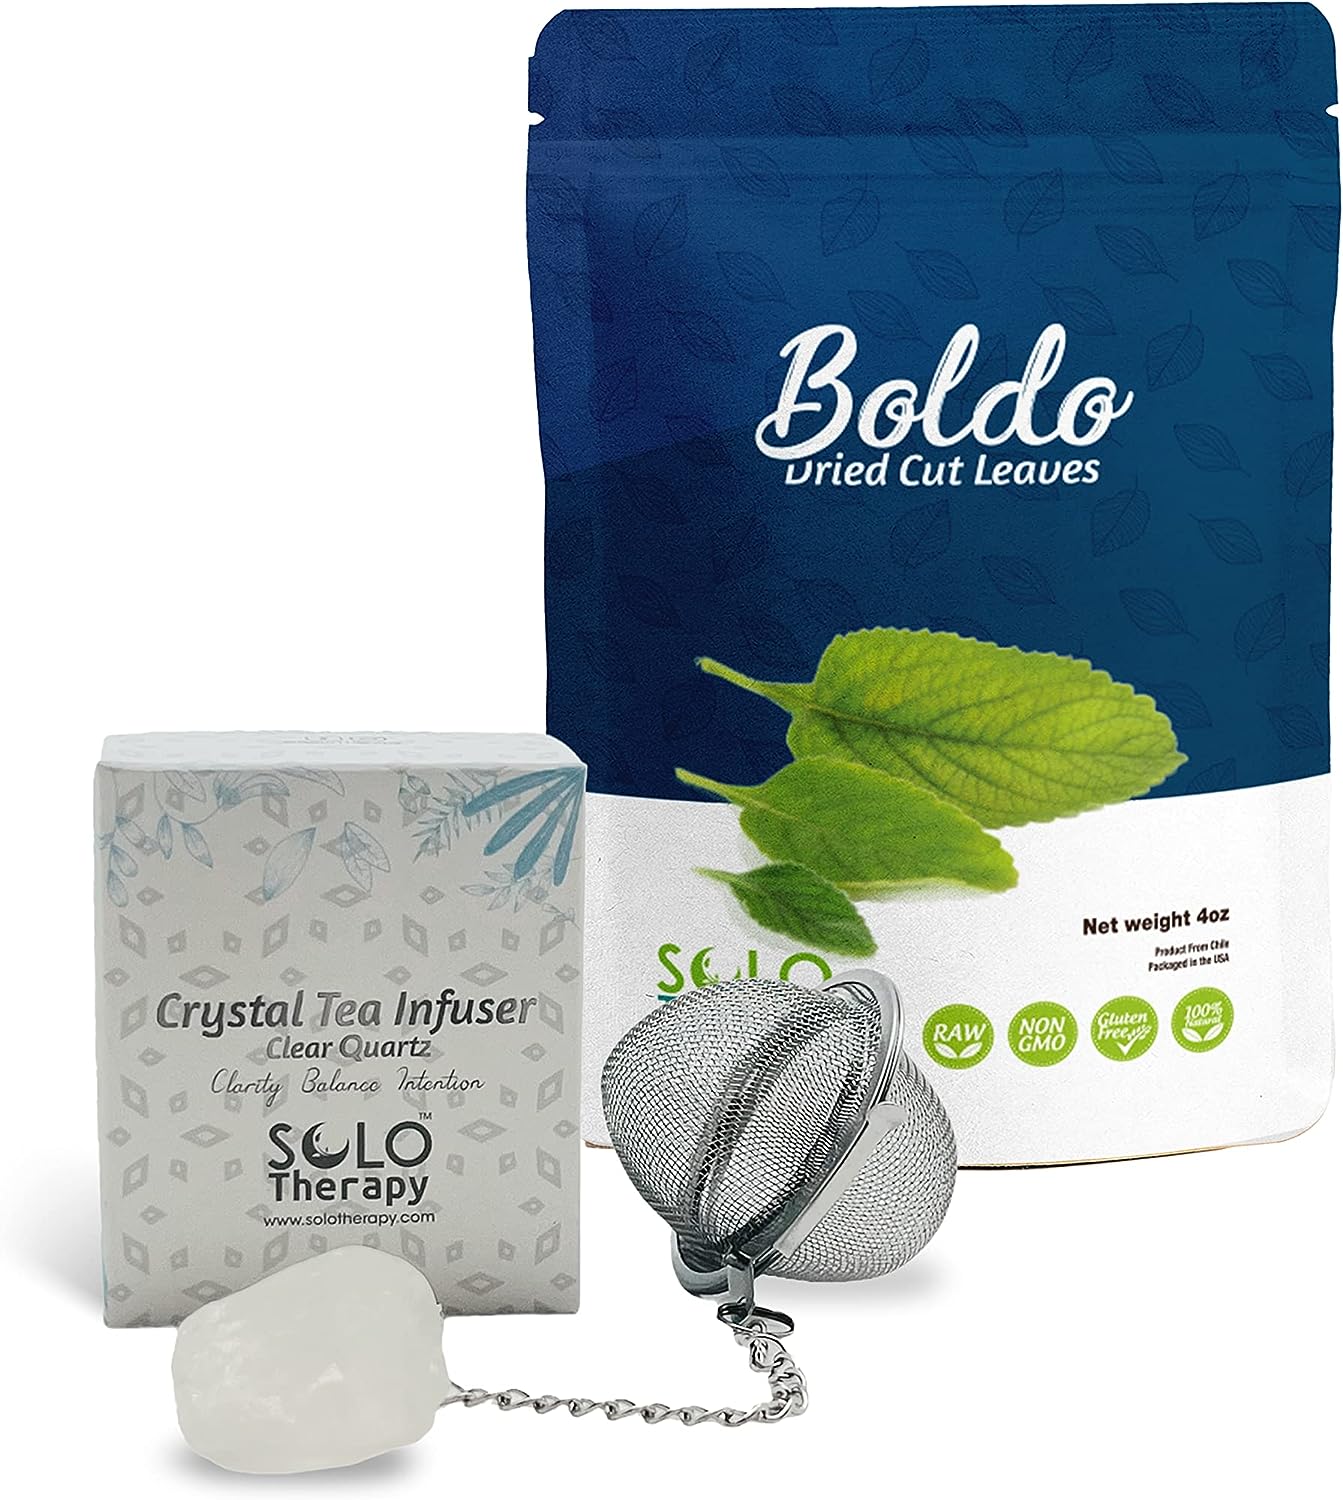 Boldo Dried Cut Leaves and Crystal Tea Infuser Clear Quartz BUNDLE, Hojas De Boldo con Filtro Para Te